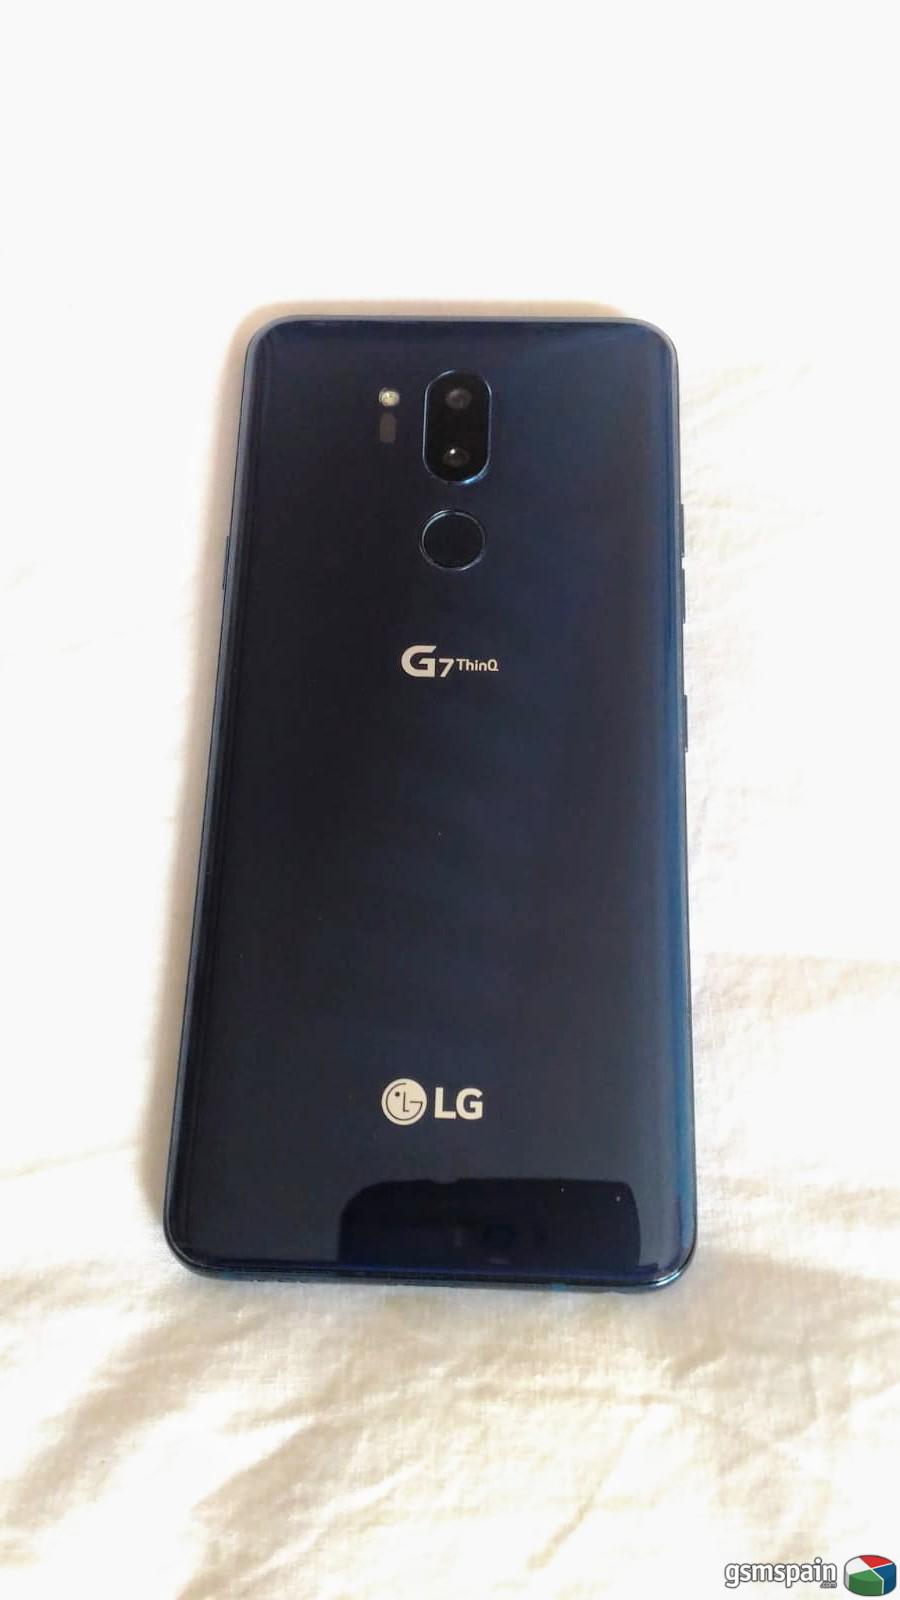 [CAMBIO] LG G7 thing